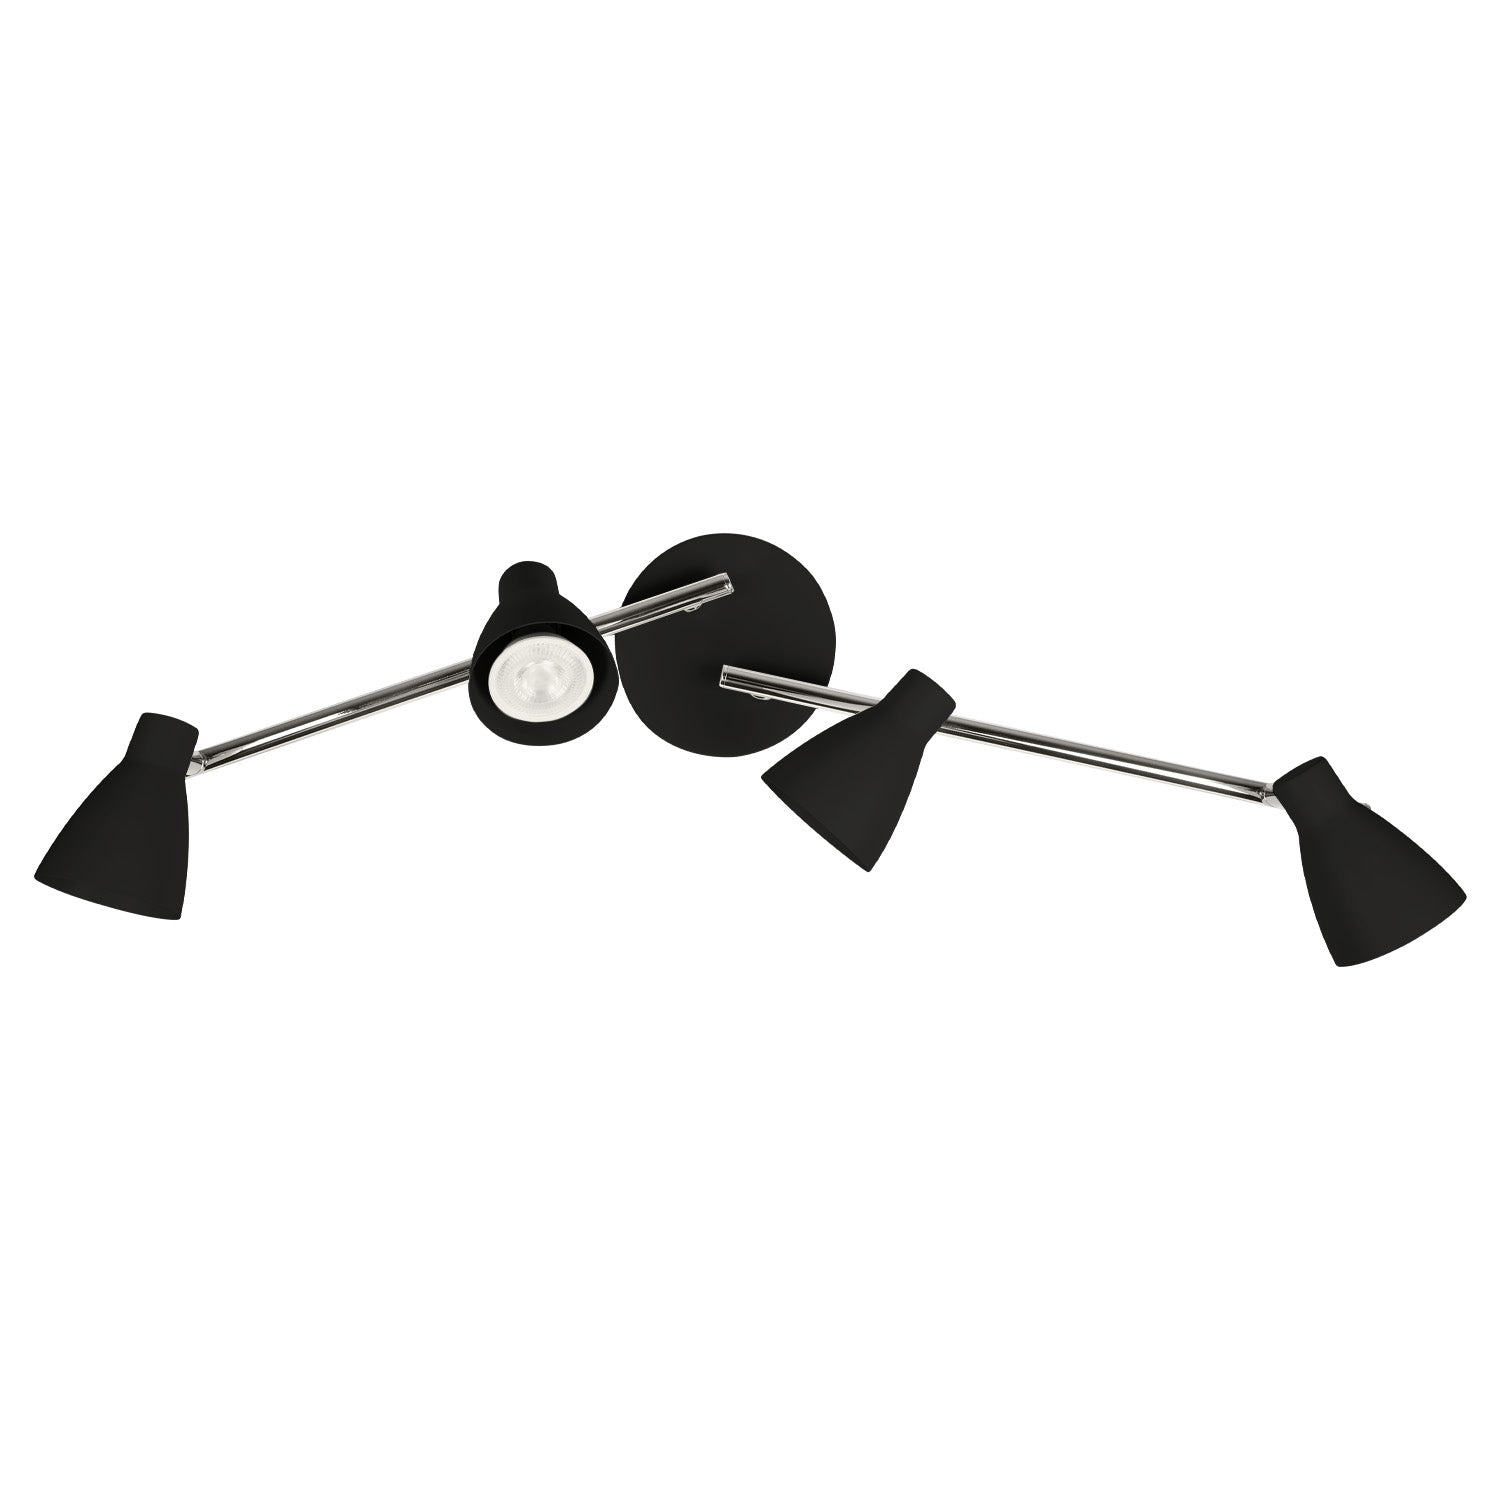 Lámpara de techo estilo riel, 4 luces, moderna, de sobreponer. Decorativo sencillo, TR-2404